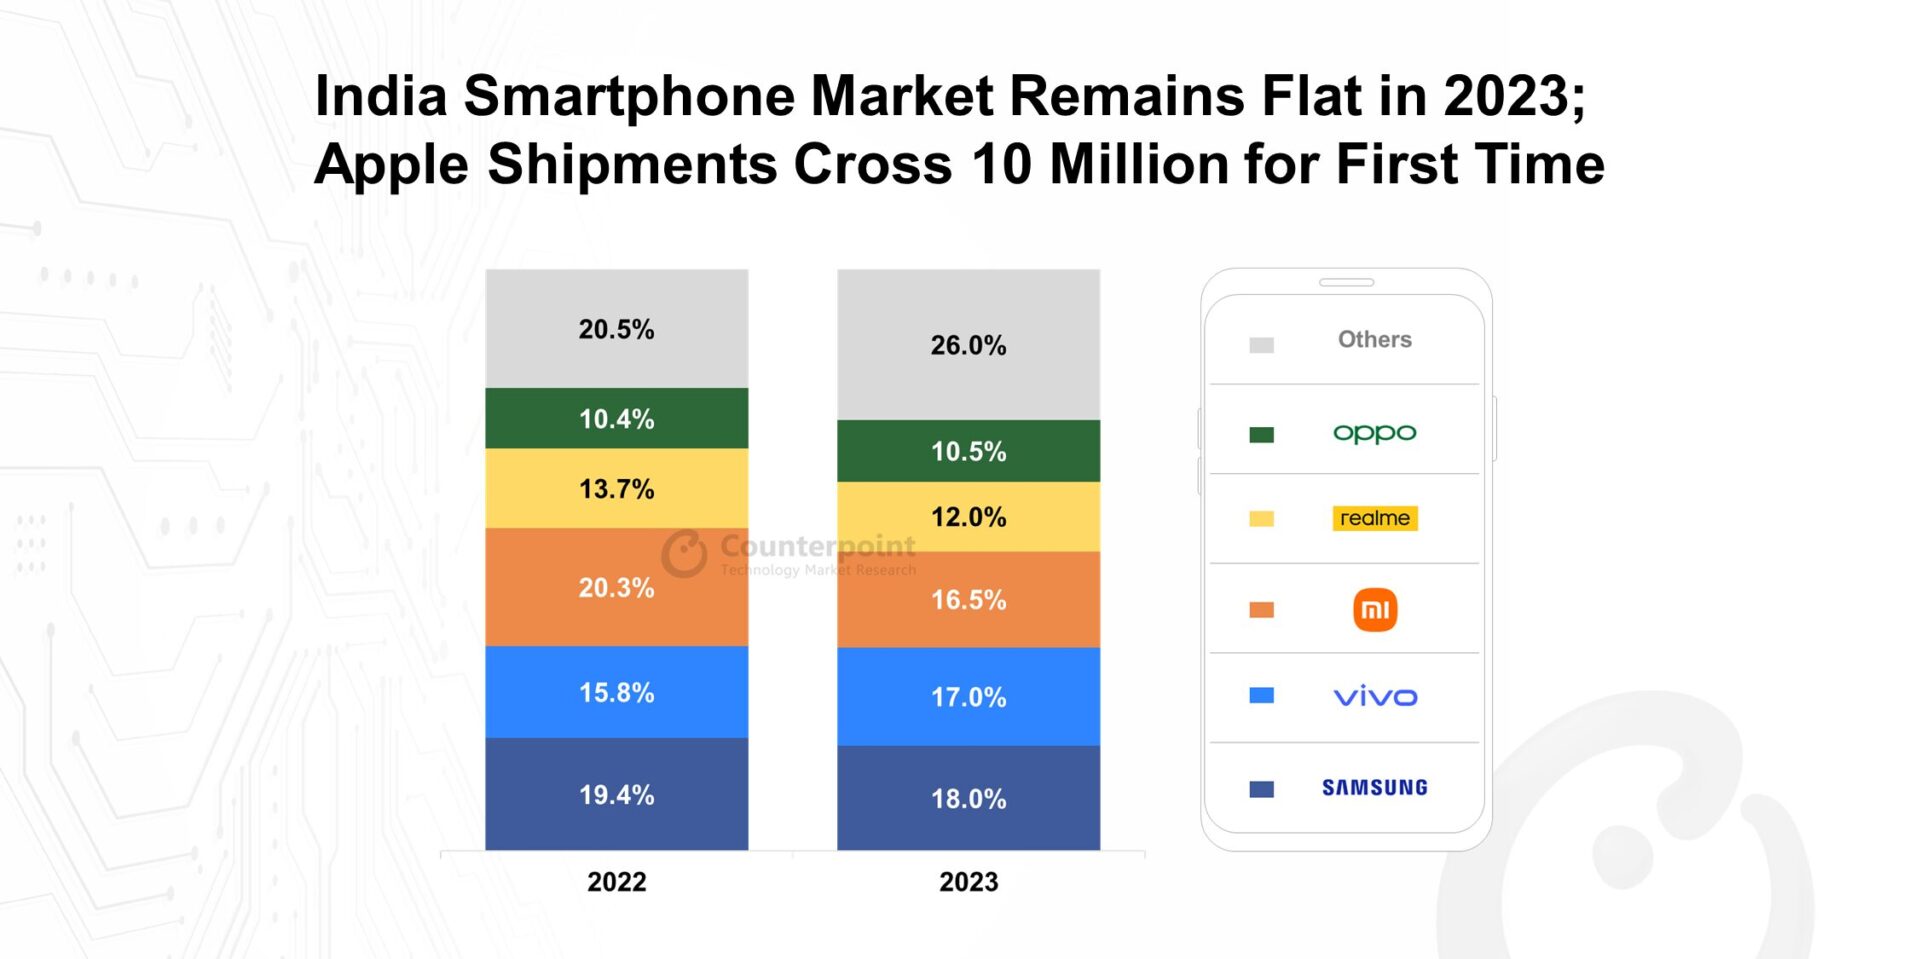 India Smartphone Market Share 2023